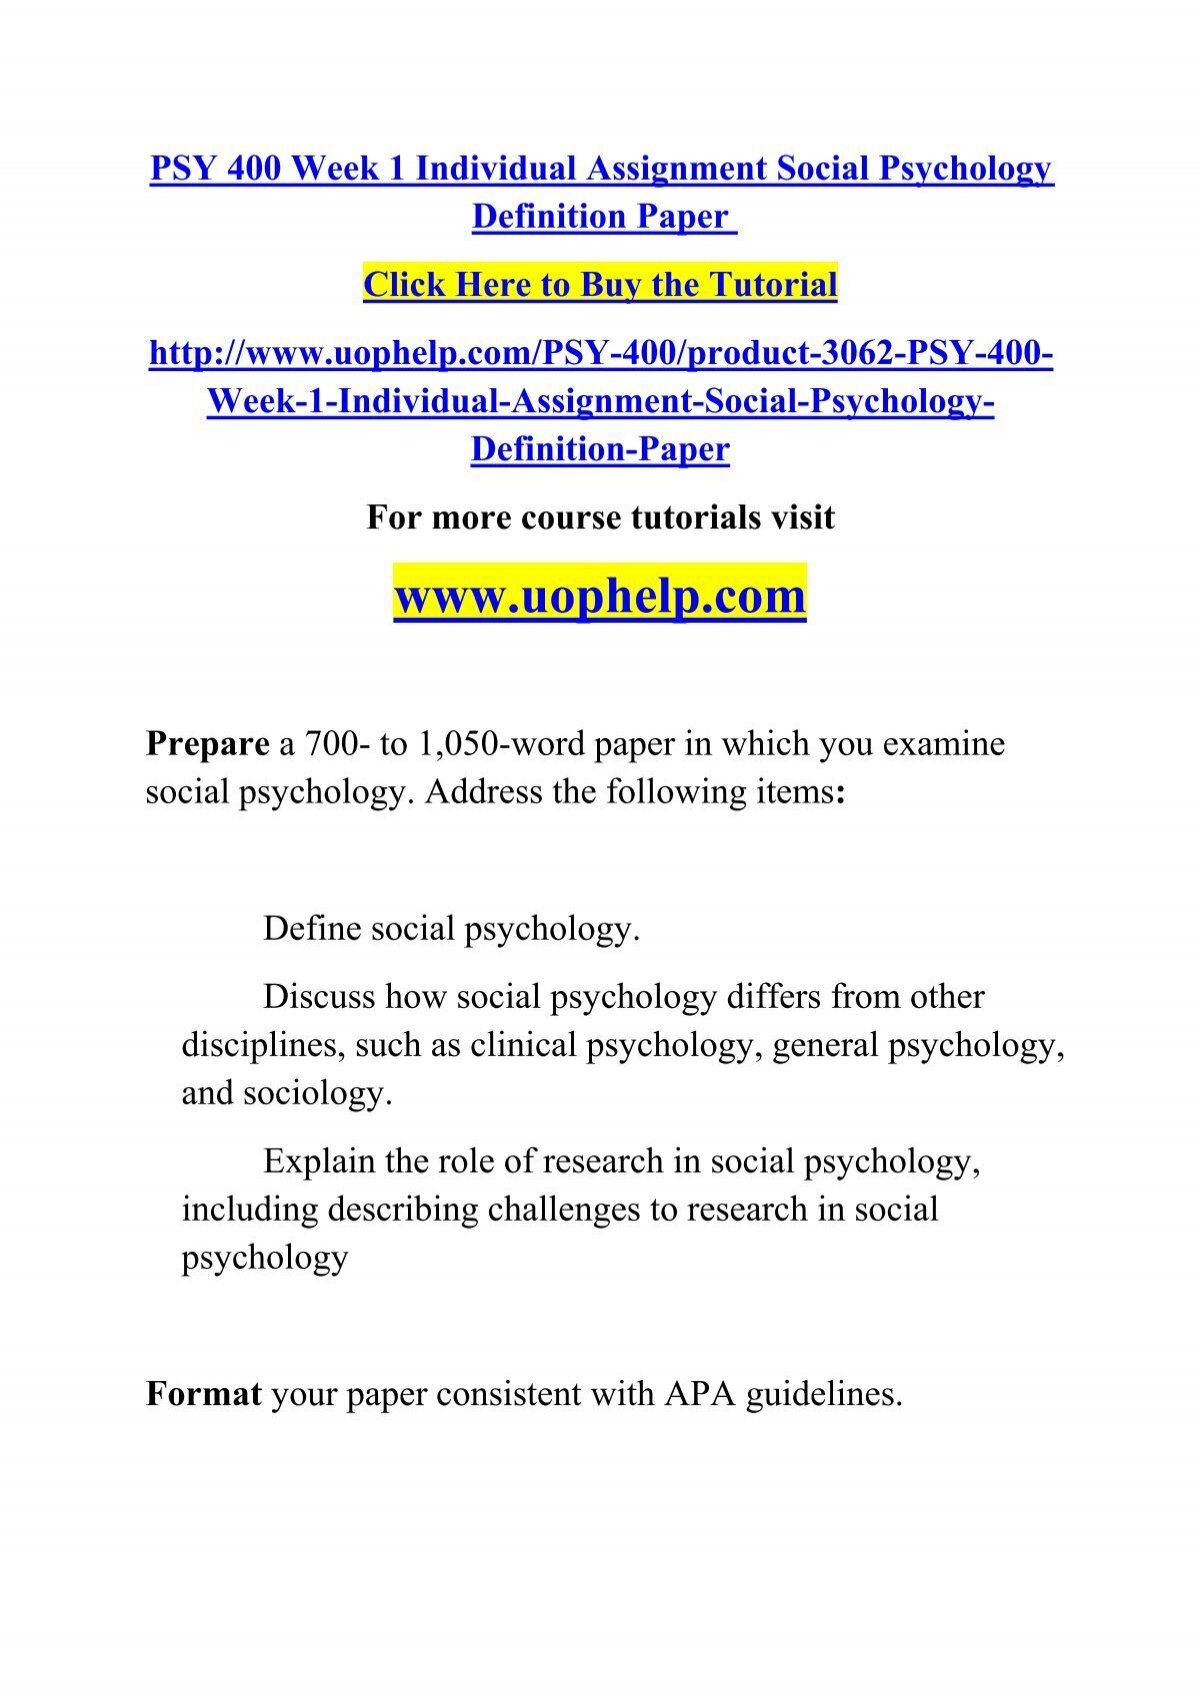 Social psychology definition paper psy 400